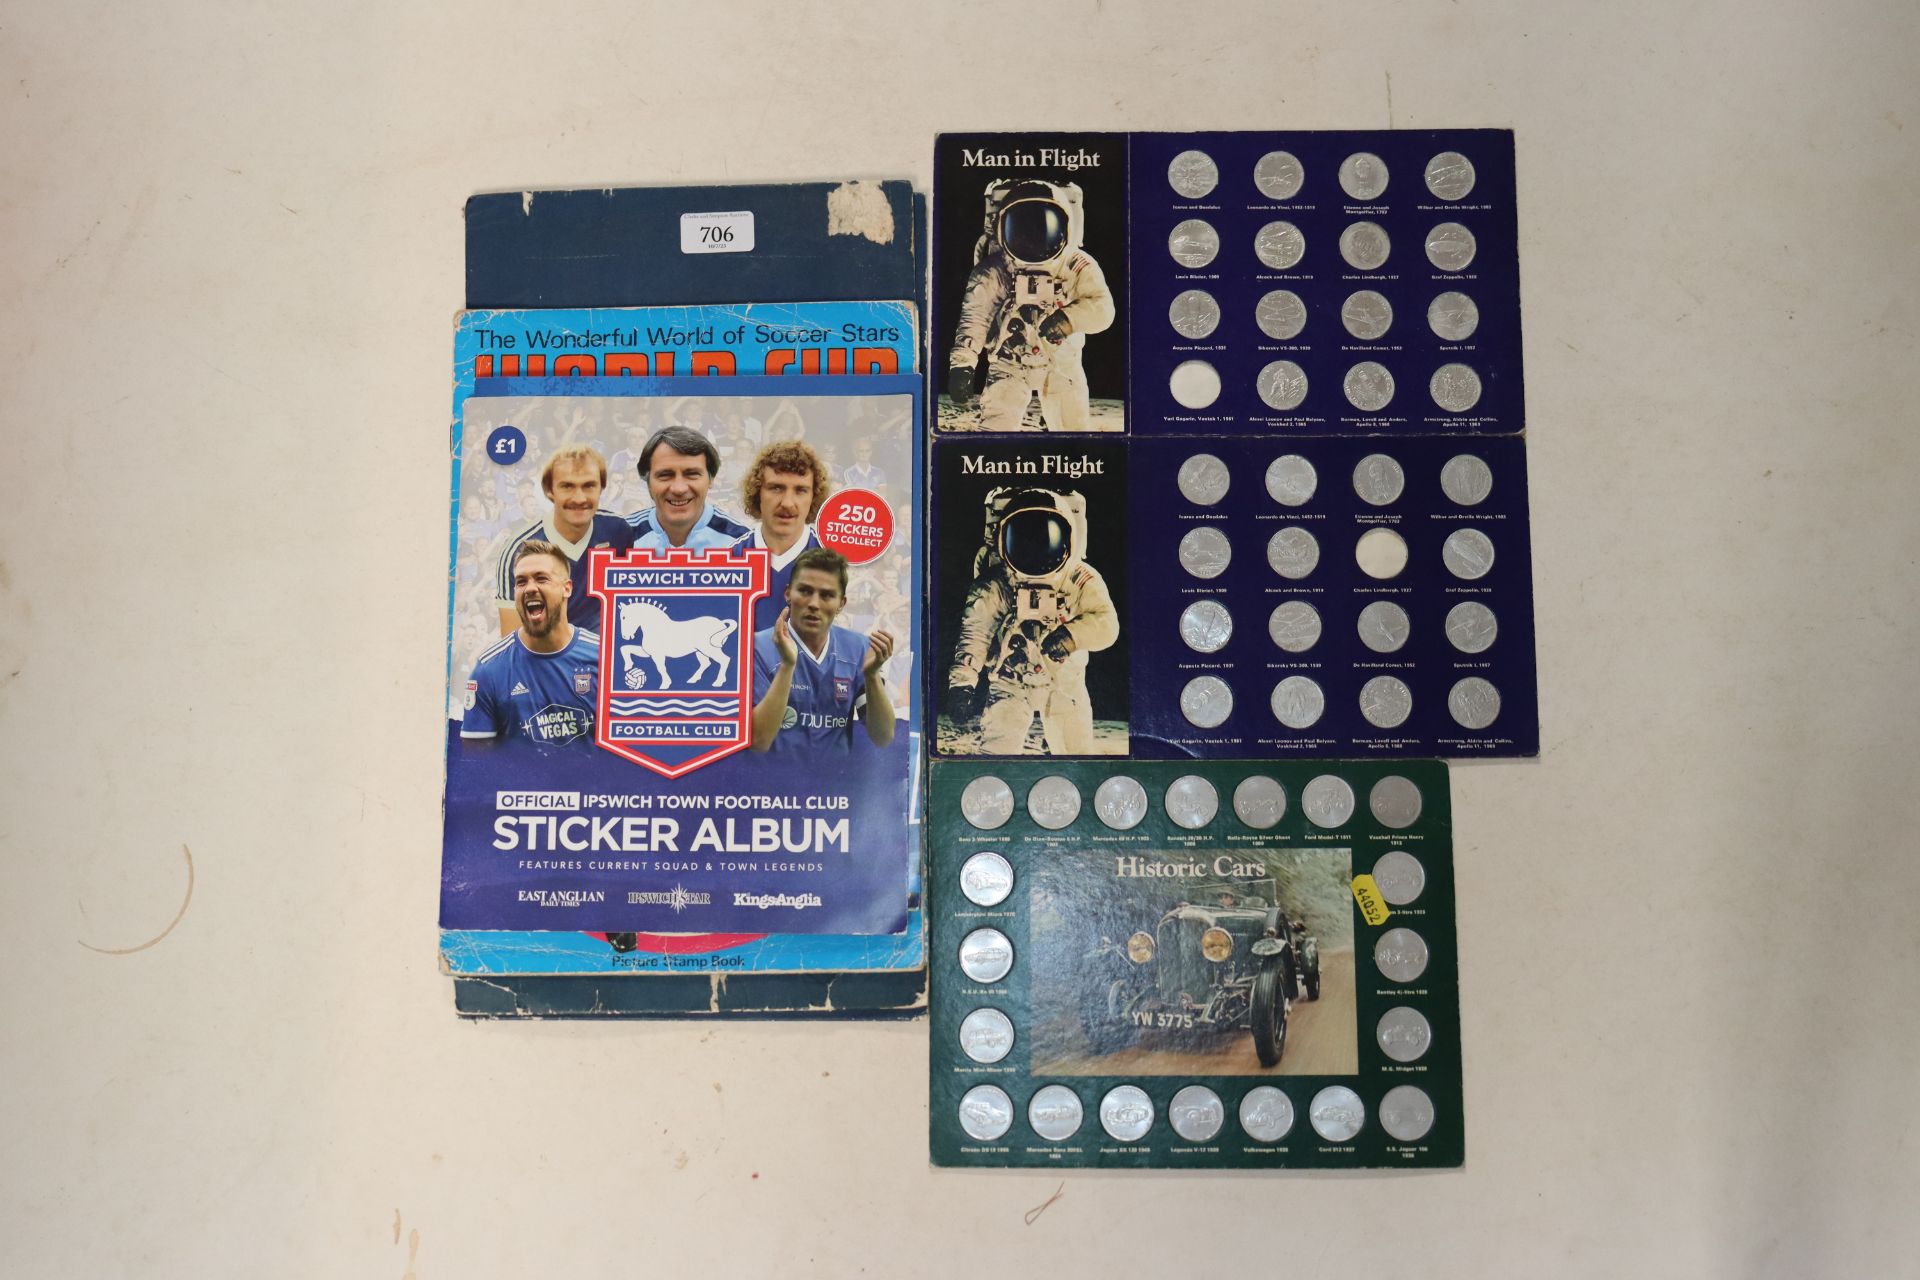 A quantity of collectors coins, Ipswich Town sticker album, World Cup 1974 soccer stars album etc